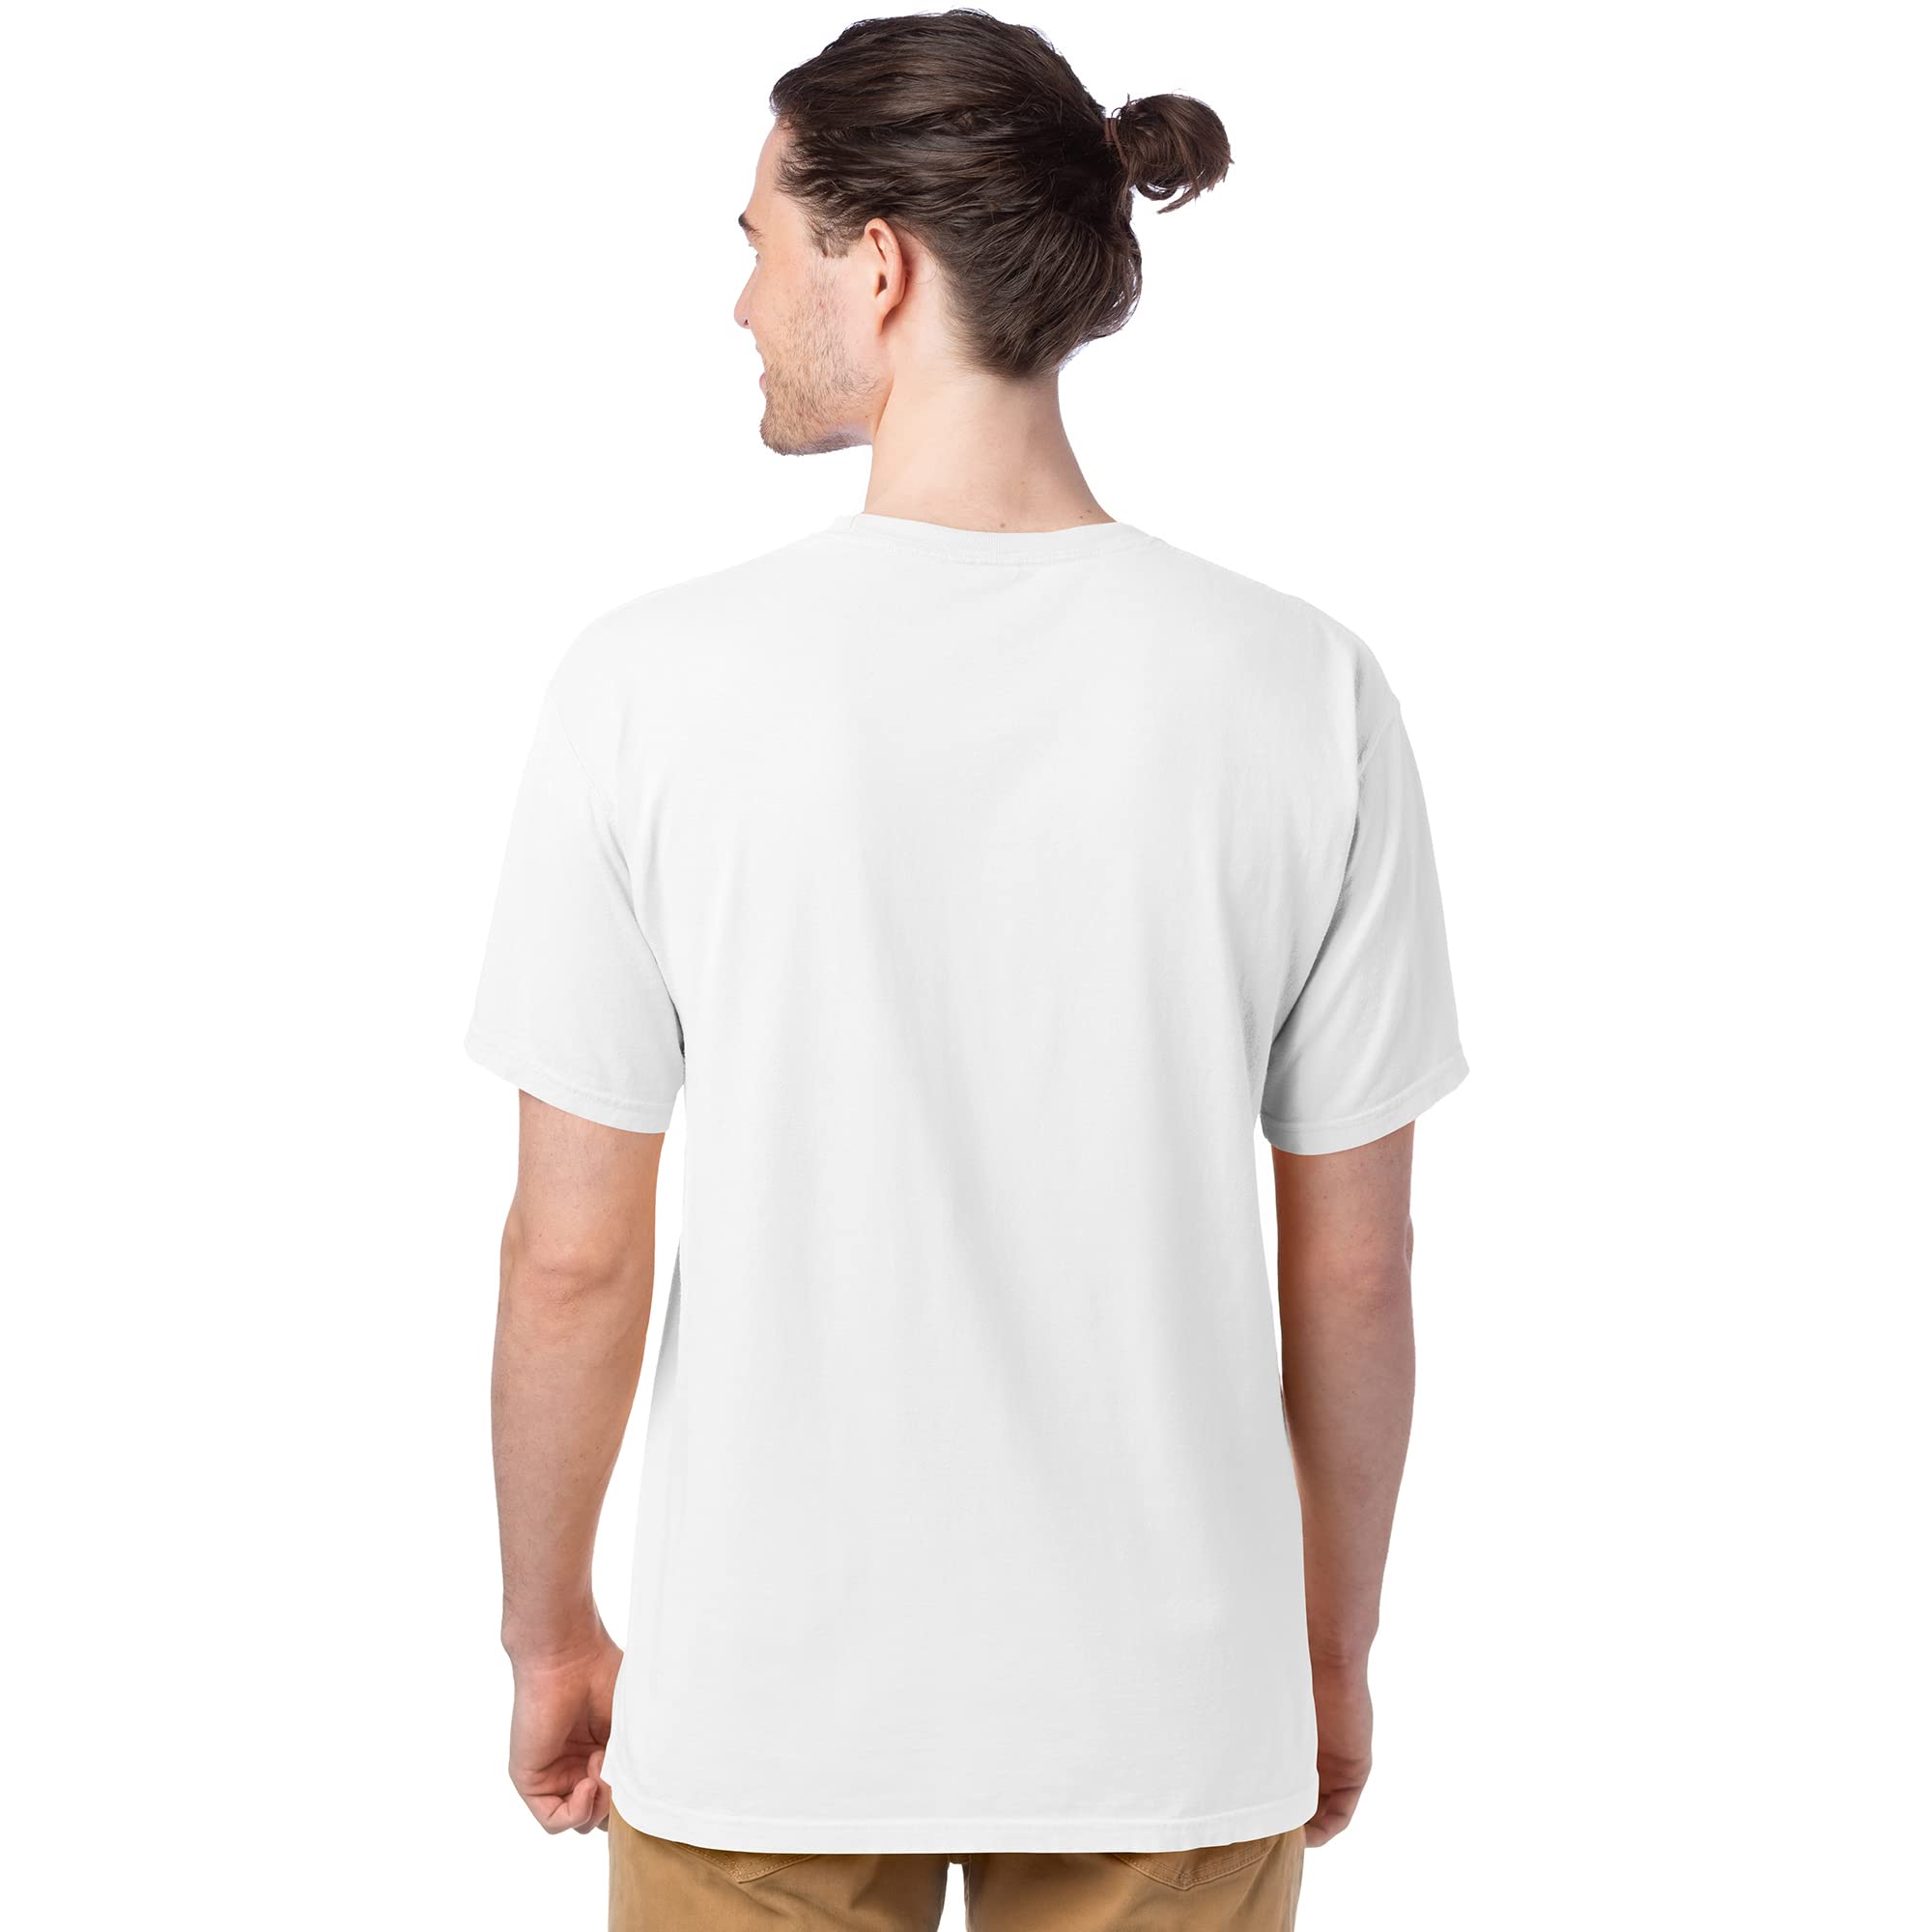 Hanes Originals Garment Dyed T-Shirt, 100% Cotton Men, Vintage Washed Tee